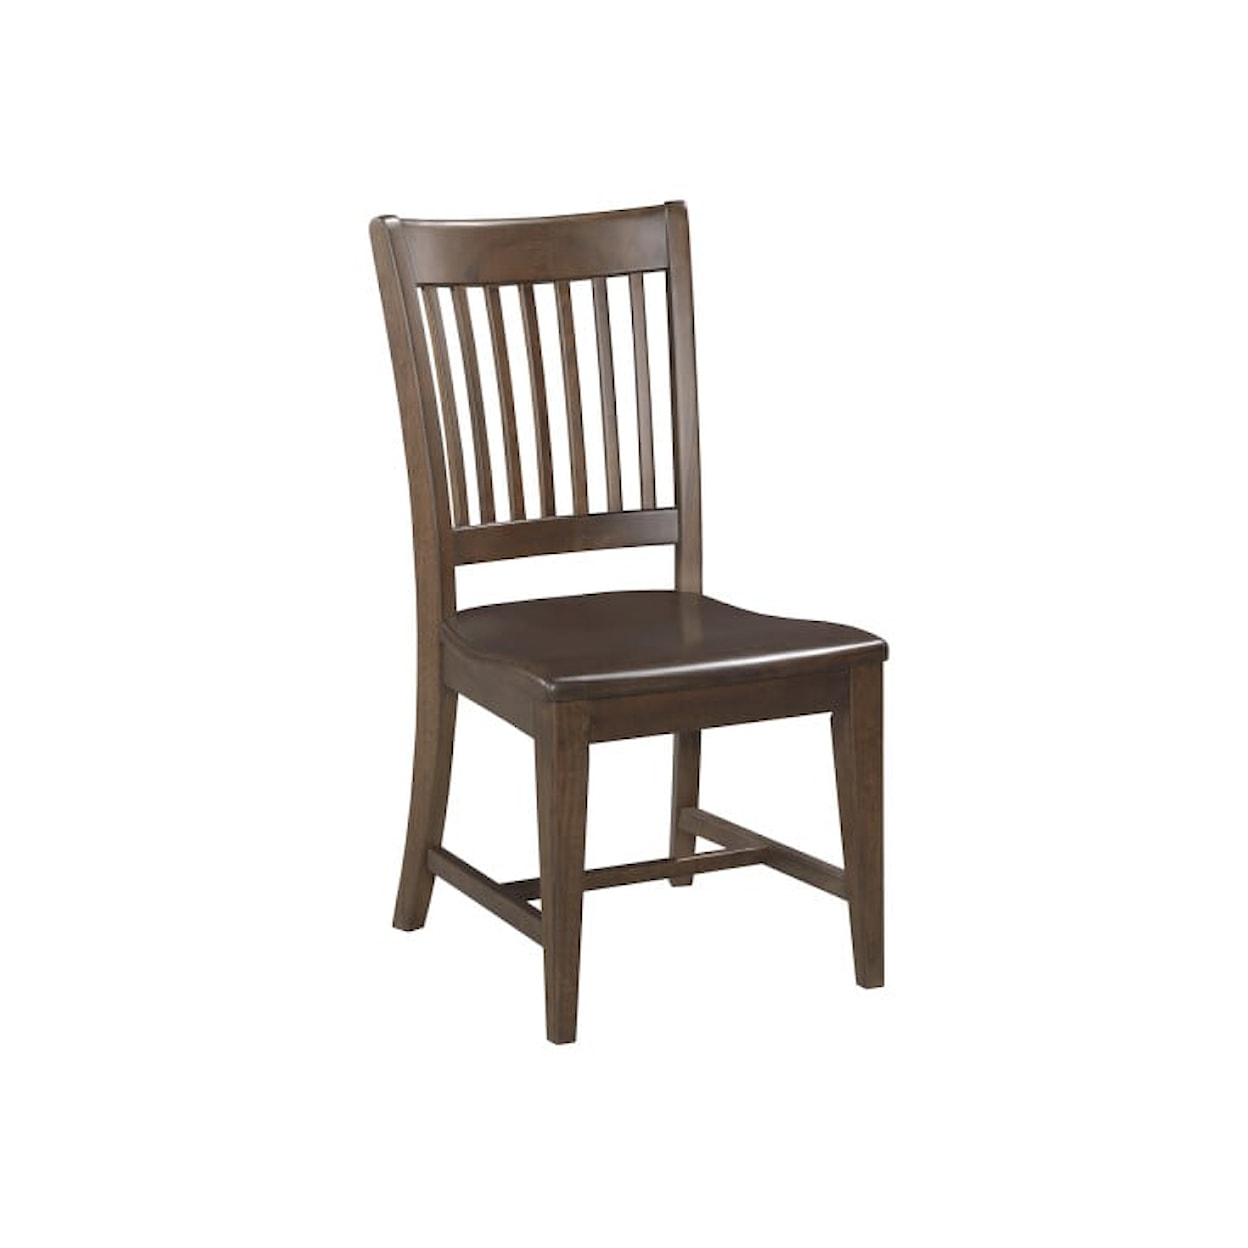 Kincaid Furniture Kafe' Rake Back Chair, Mocha